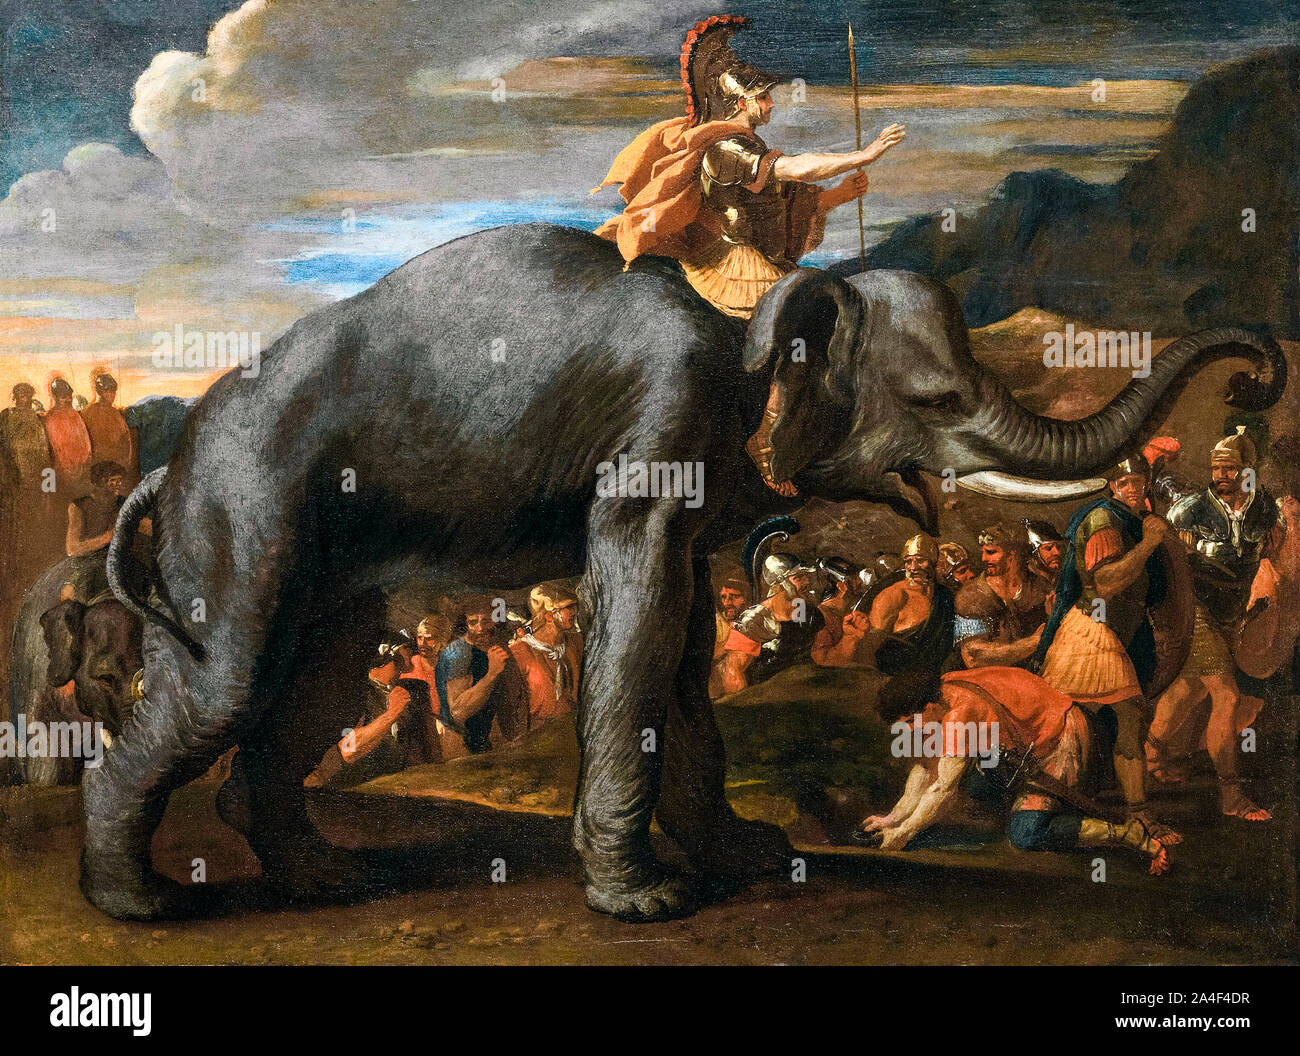 Nicolas Poussin, painting, Hannibal crossing the Alps on Elephants, 1625-1626 Stock Photo